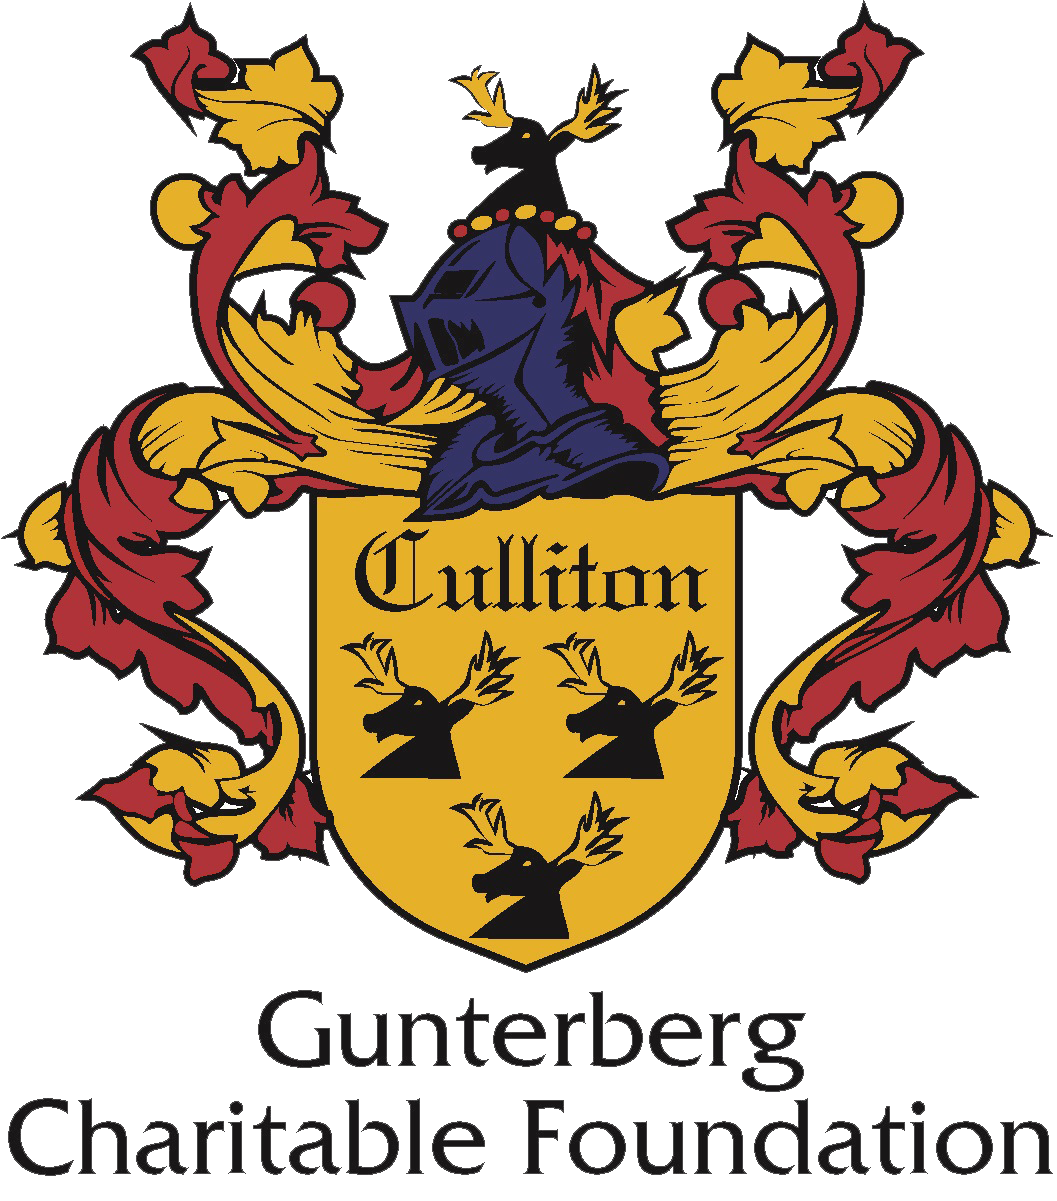 Gunterberg Charitable Foundation